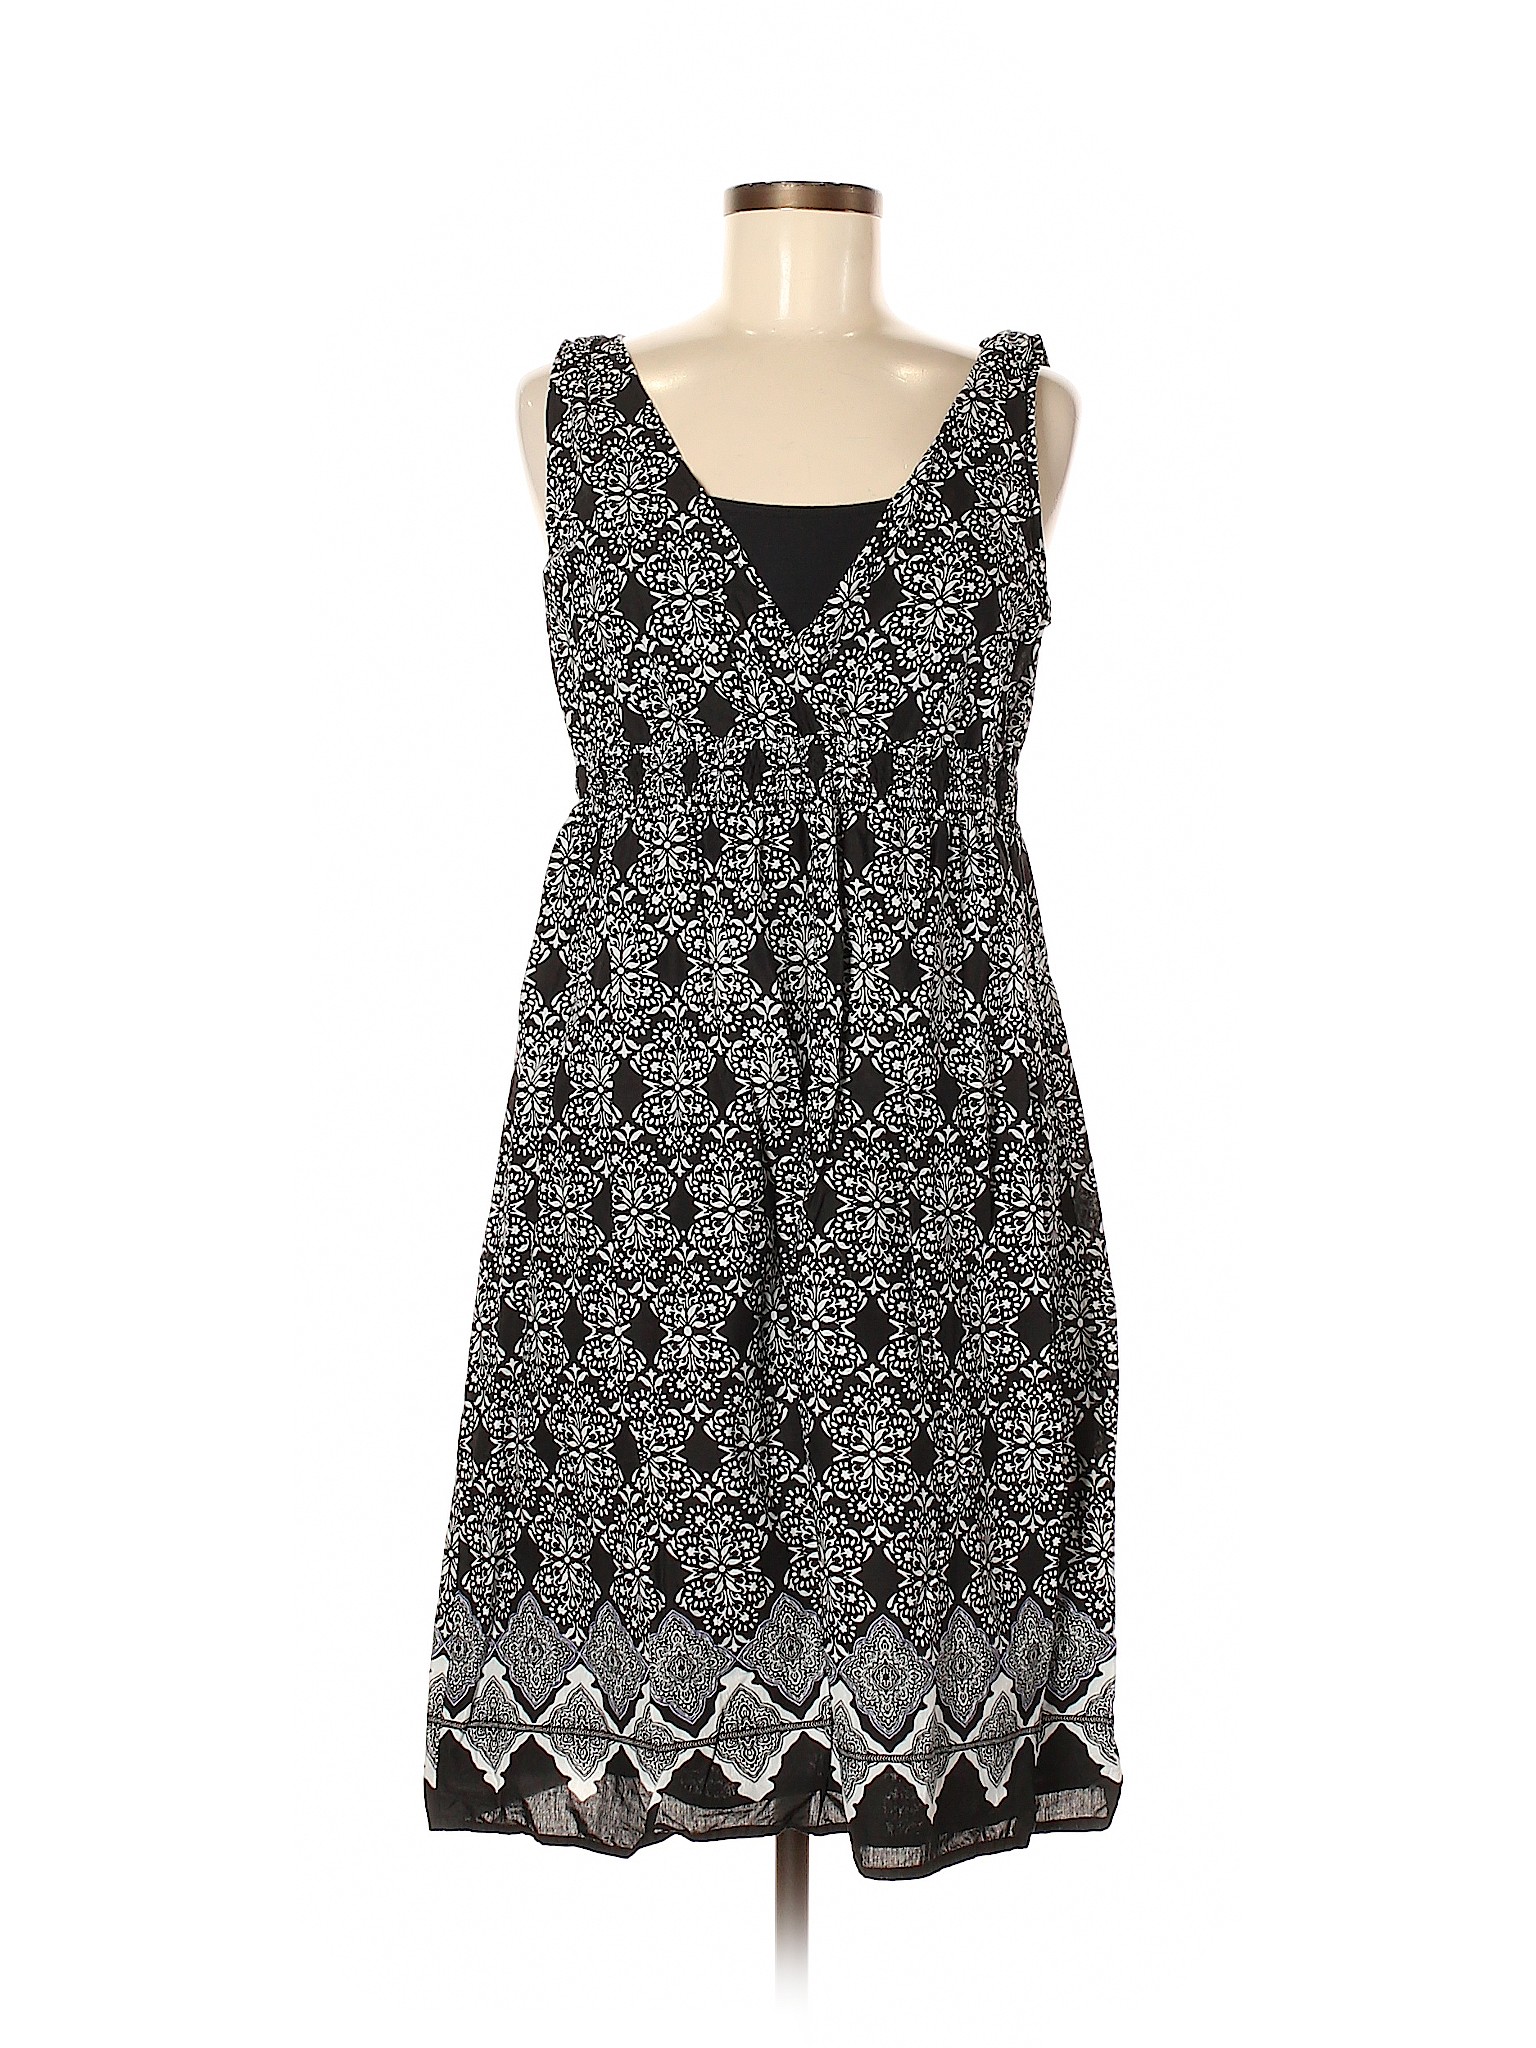 Sonoma Life + Style Women Black Casual Dress Med | eBay